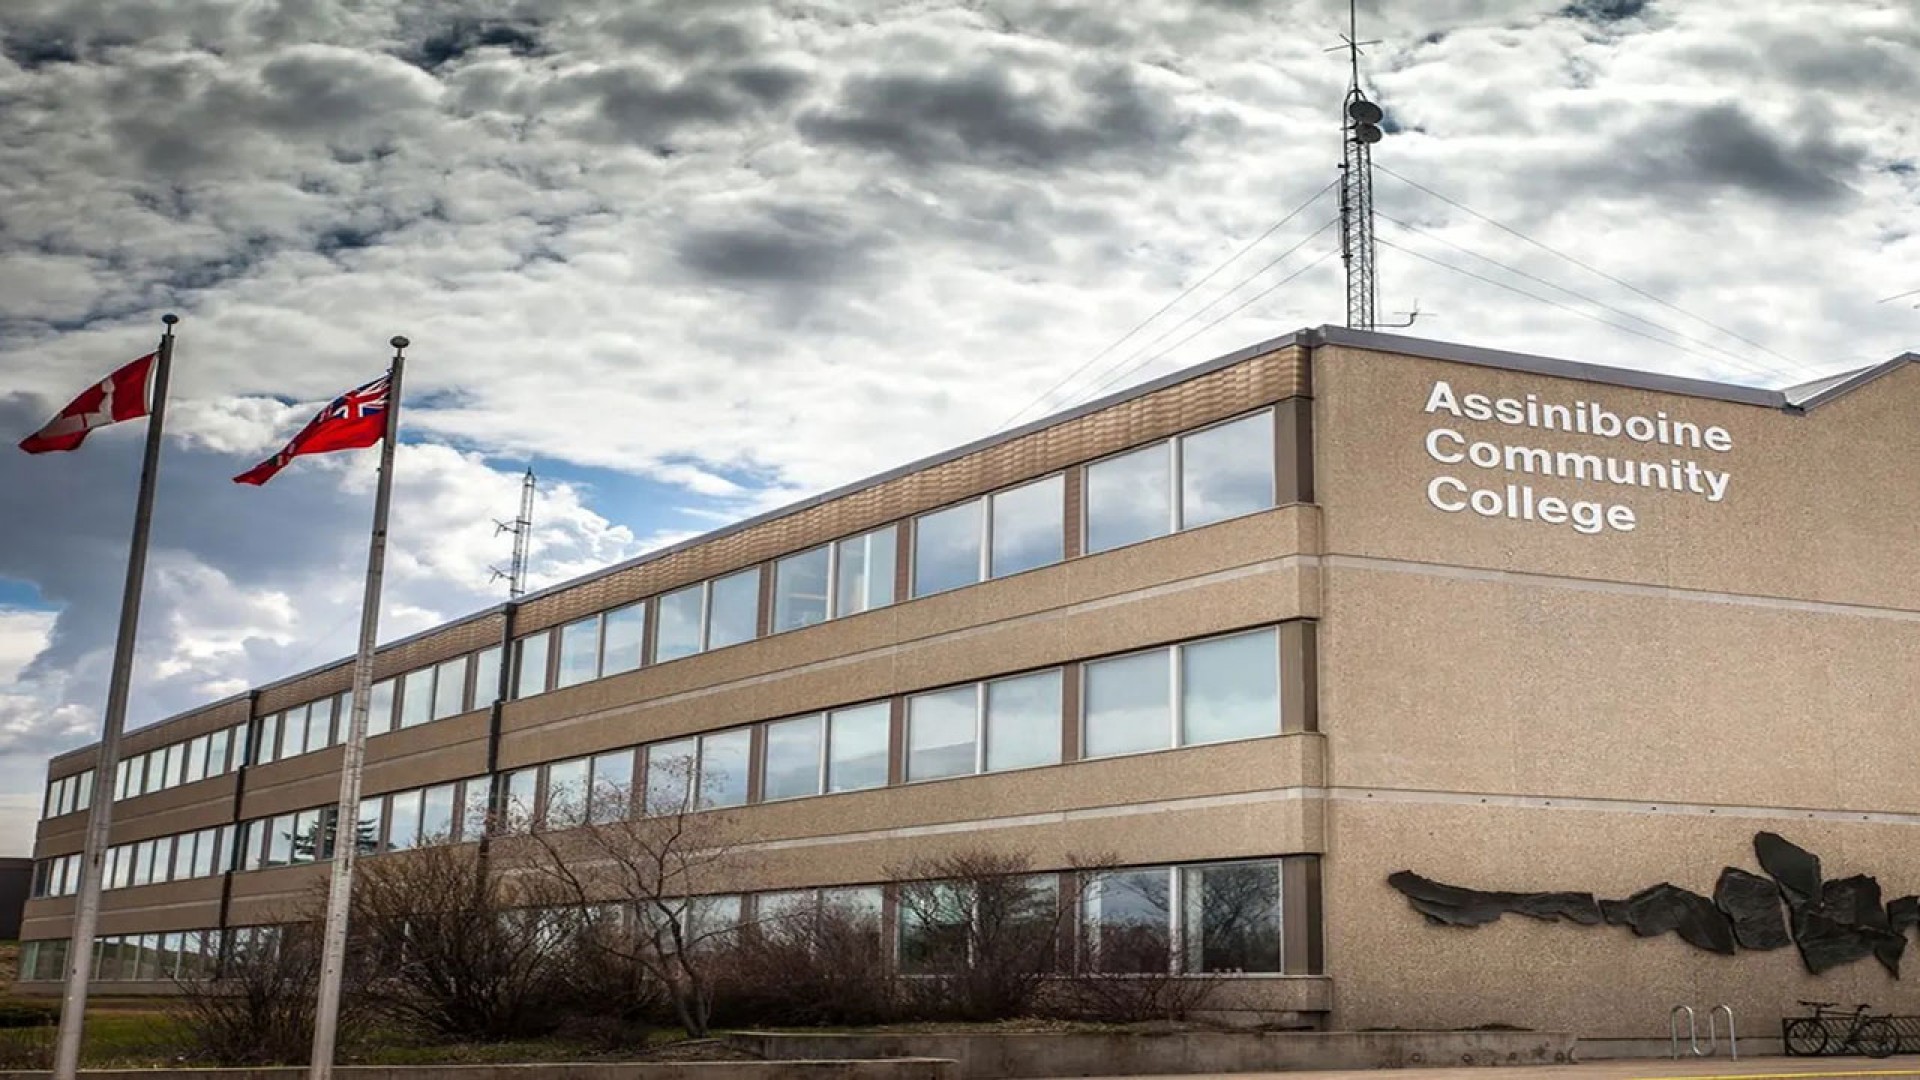 Tìm hiểu du học Manitoba Canada tại trường Assiniboine Community College danh tiếng